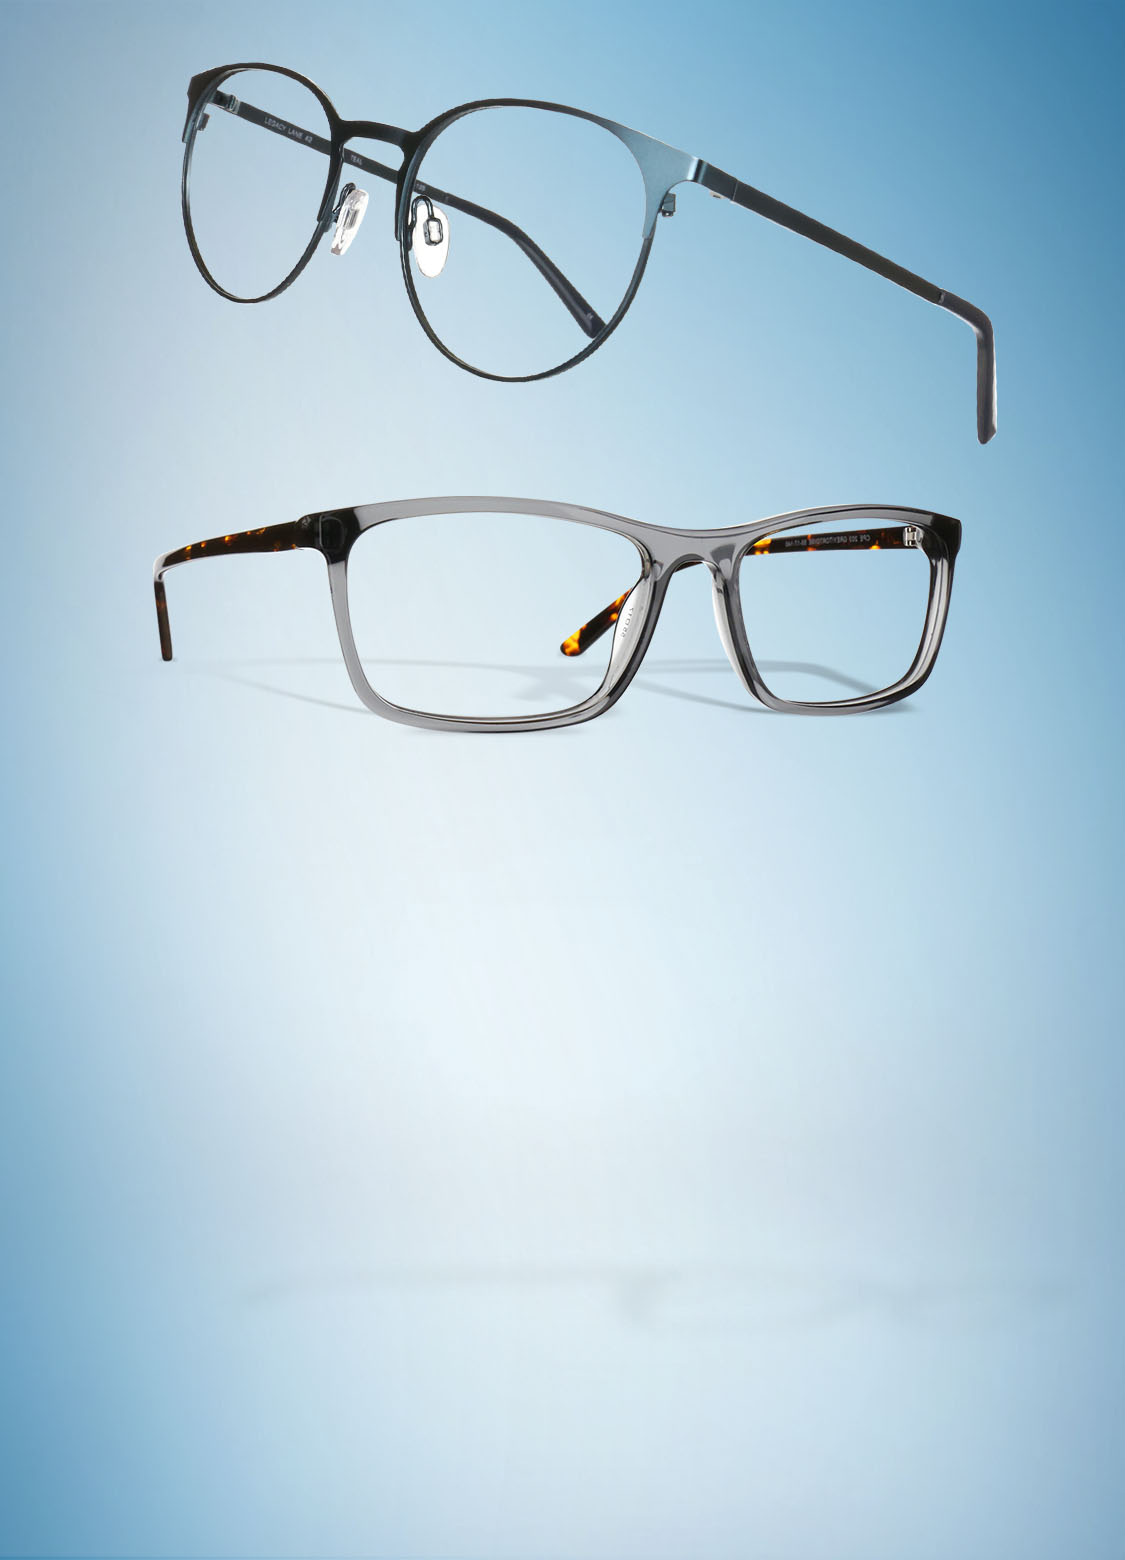 2 pairs of prescription eyeglasses